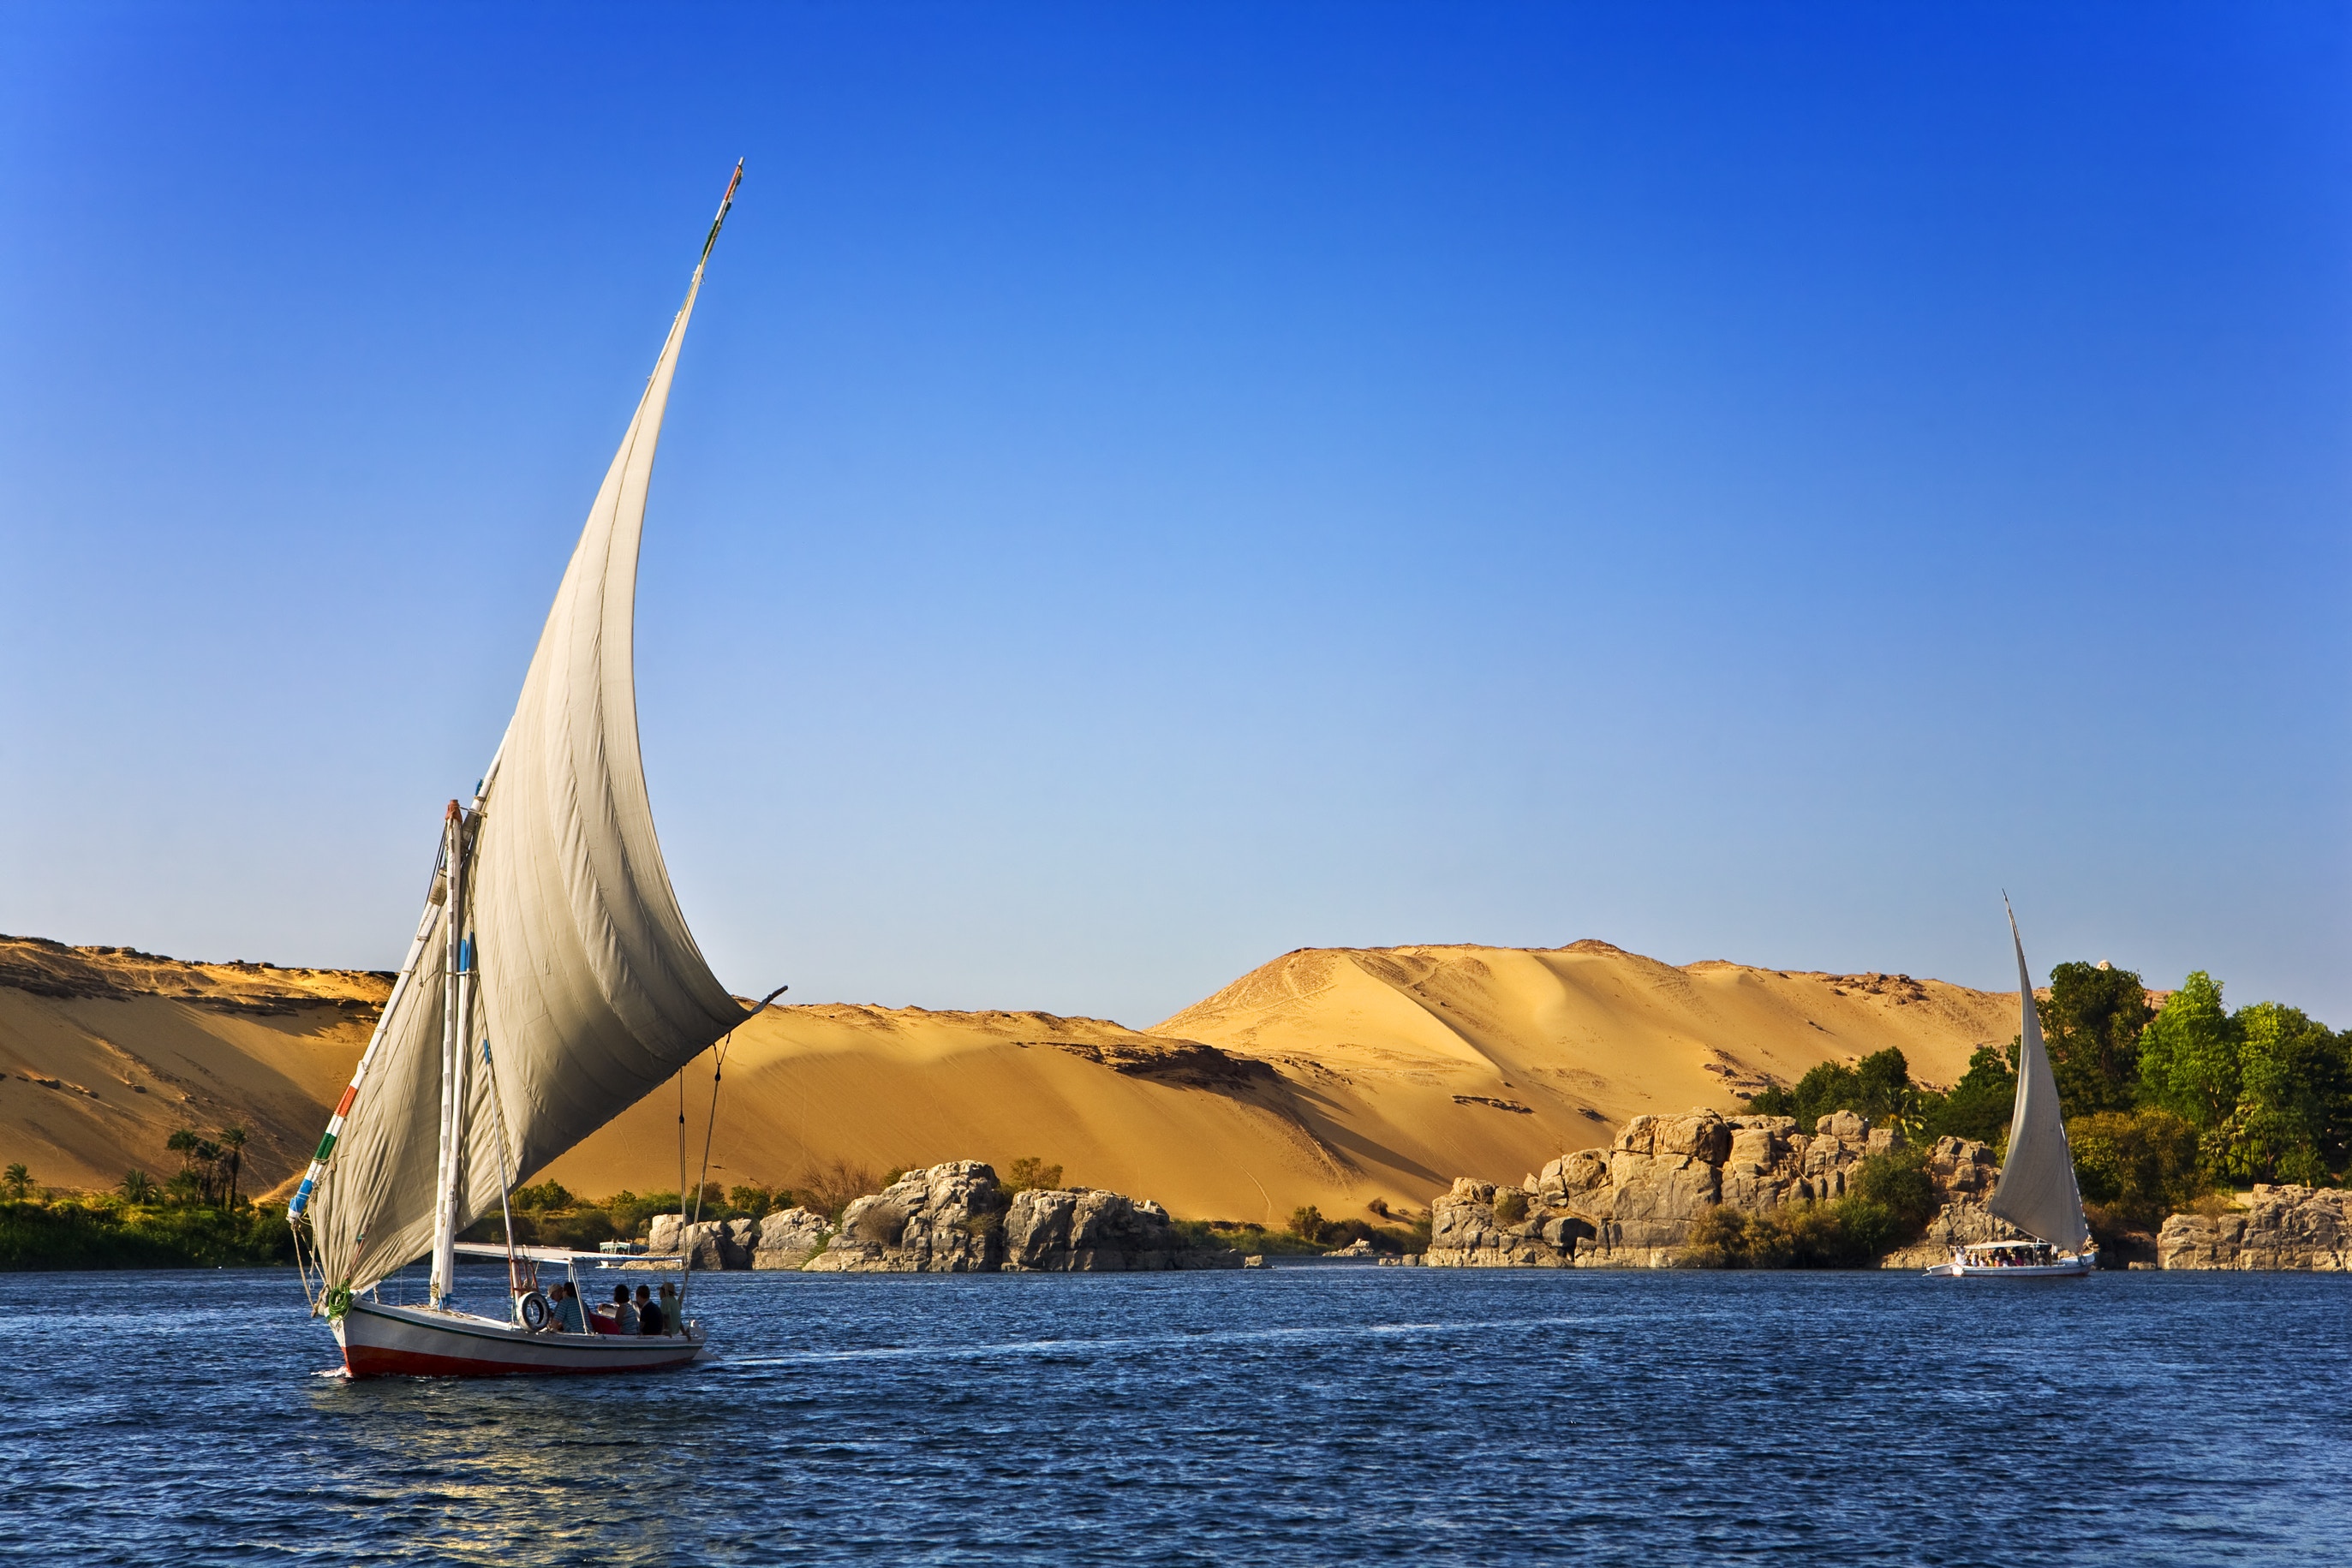 Nile River Cruising